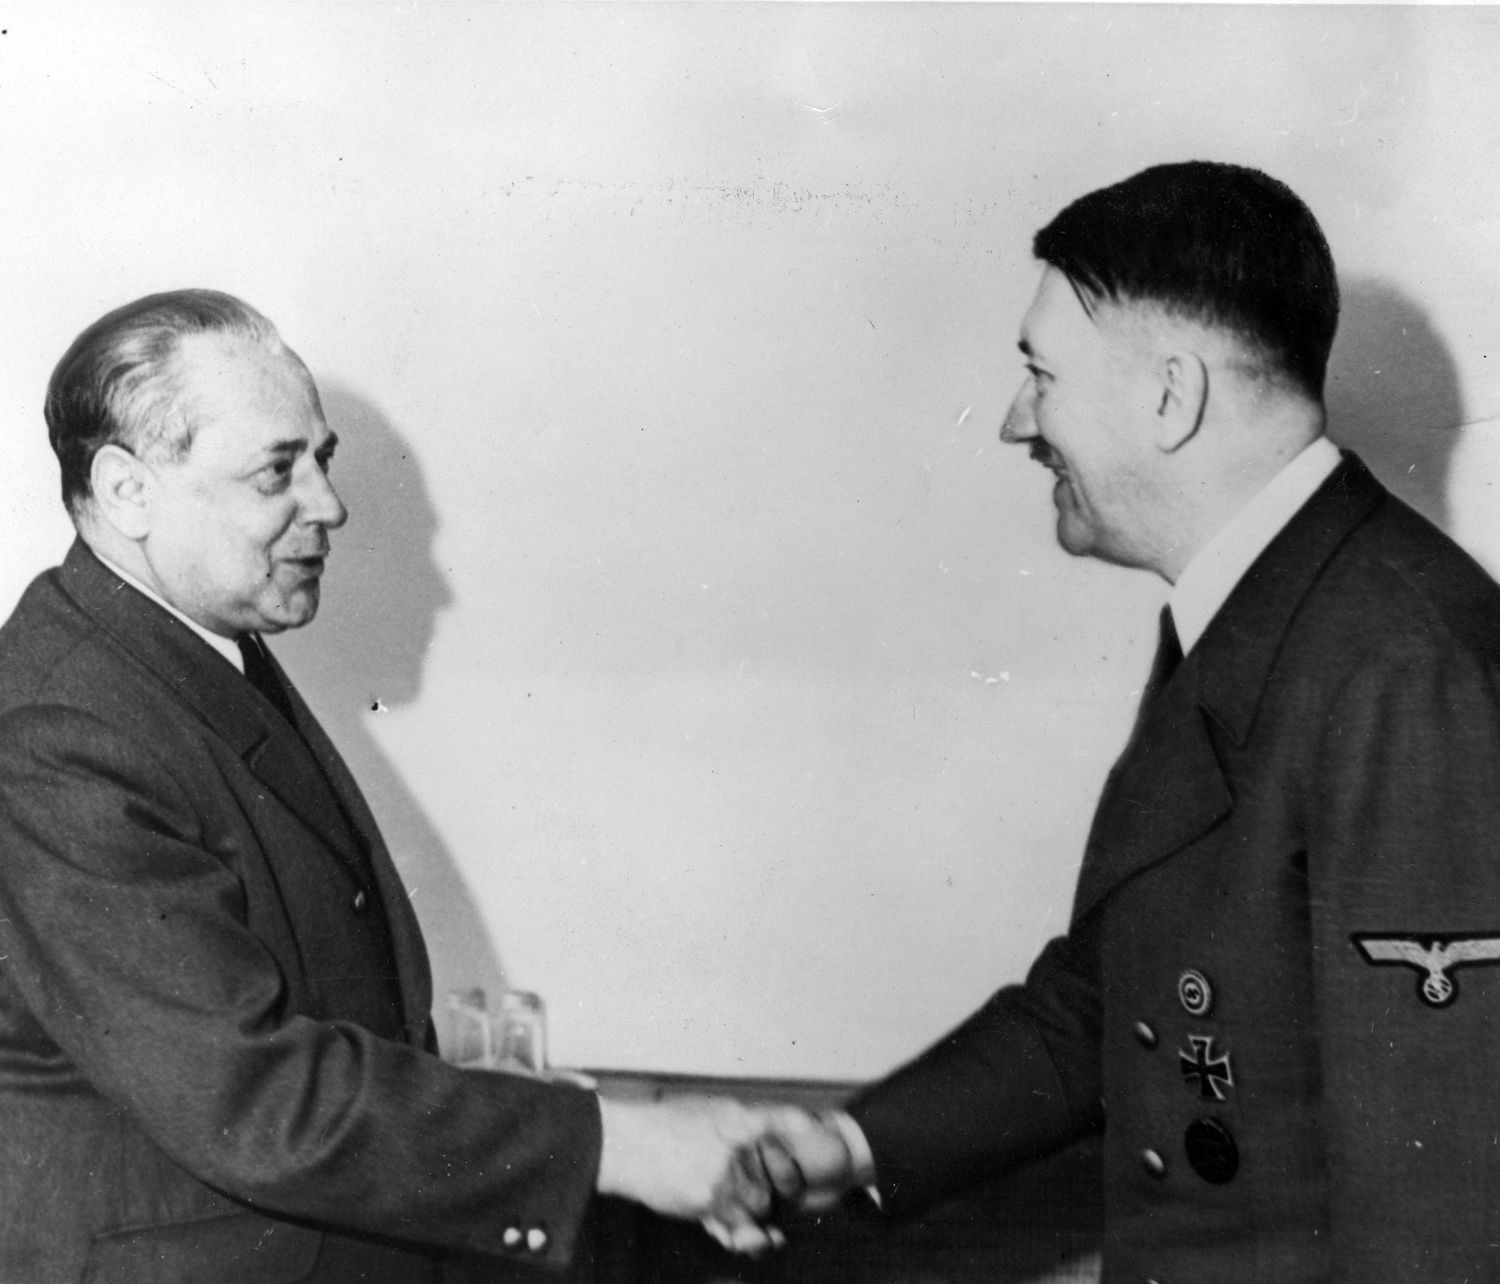 Adolf Hitler greets his personal photographer, Heinrich Hoffmann